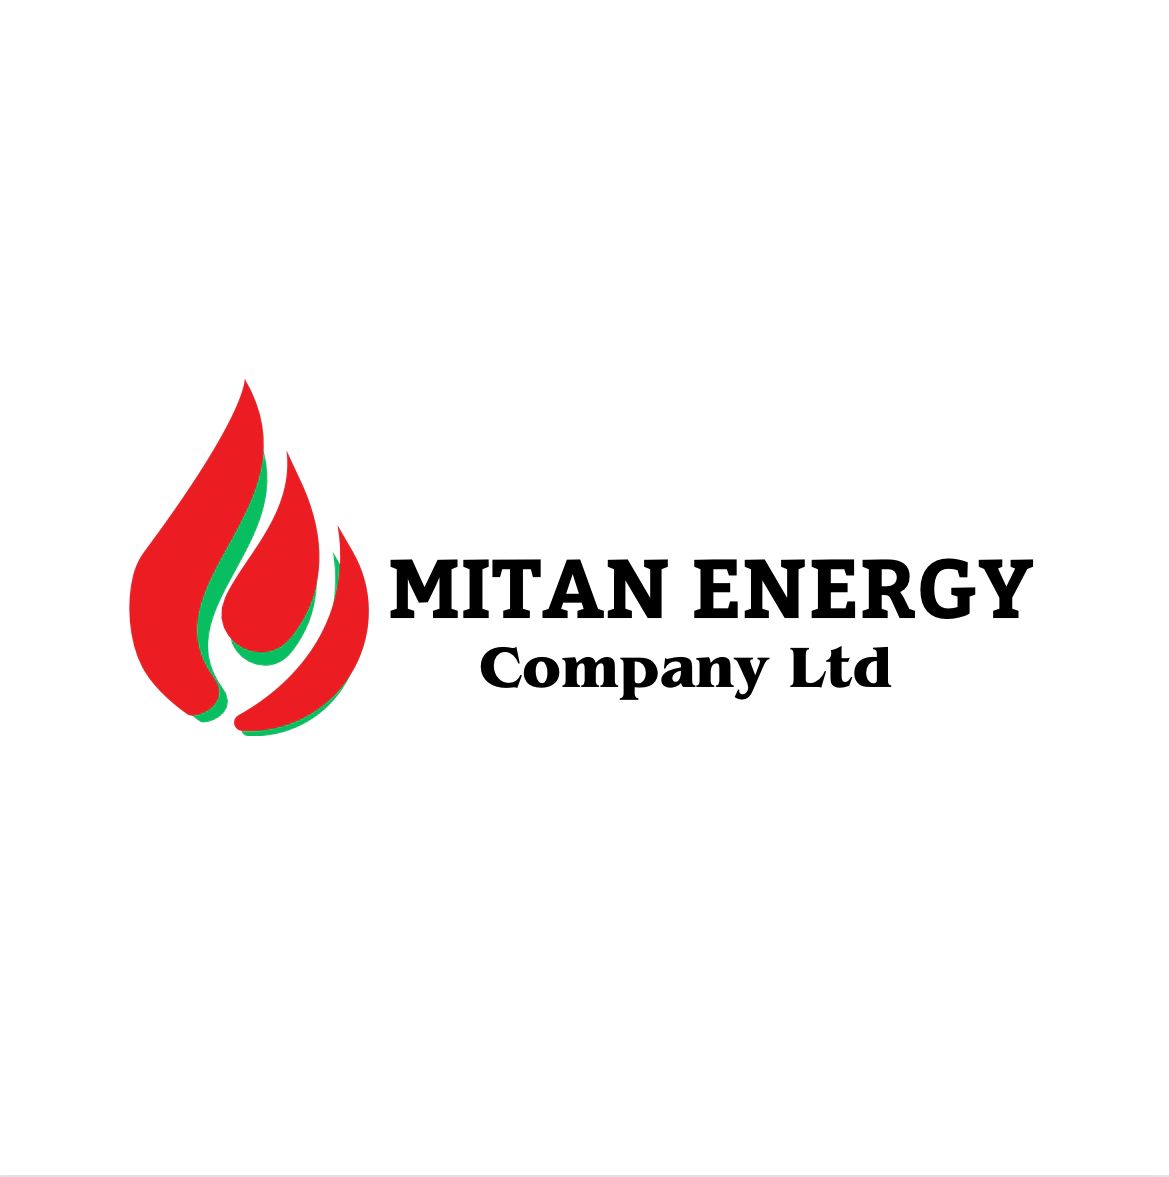 Mitan Energy Company Ltd